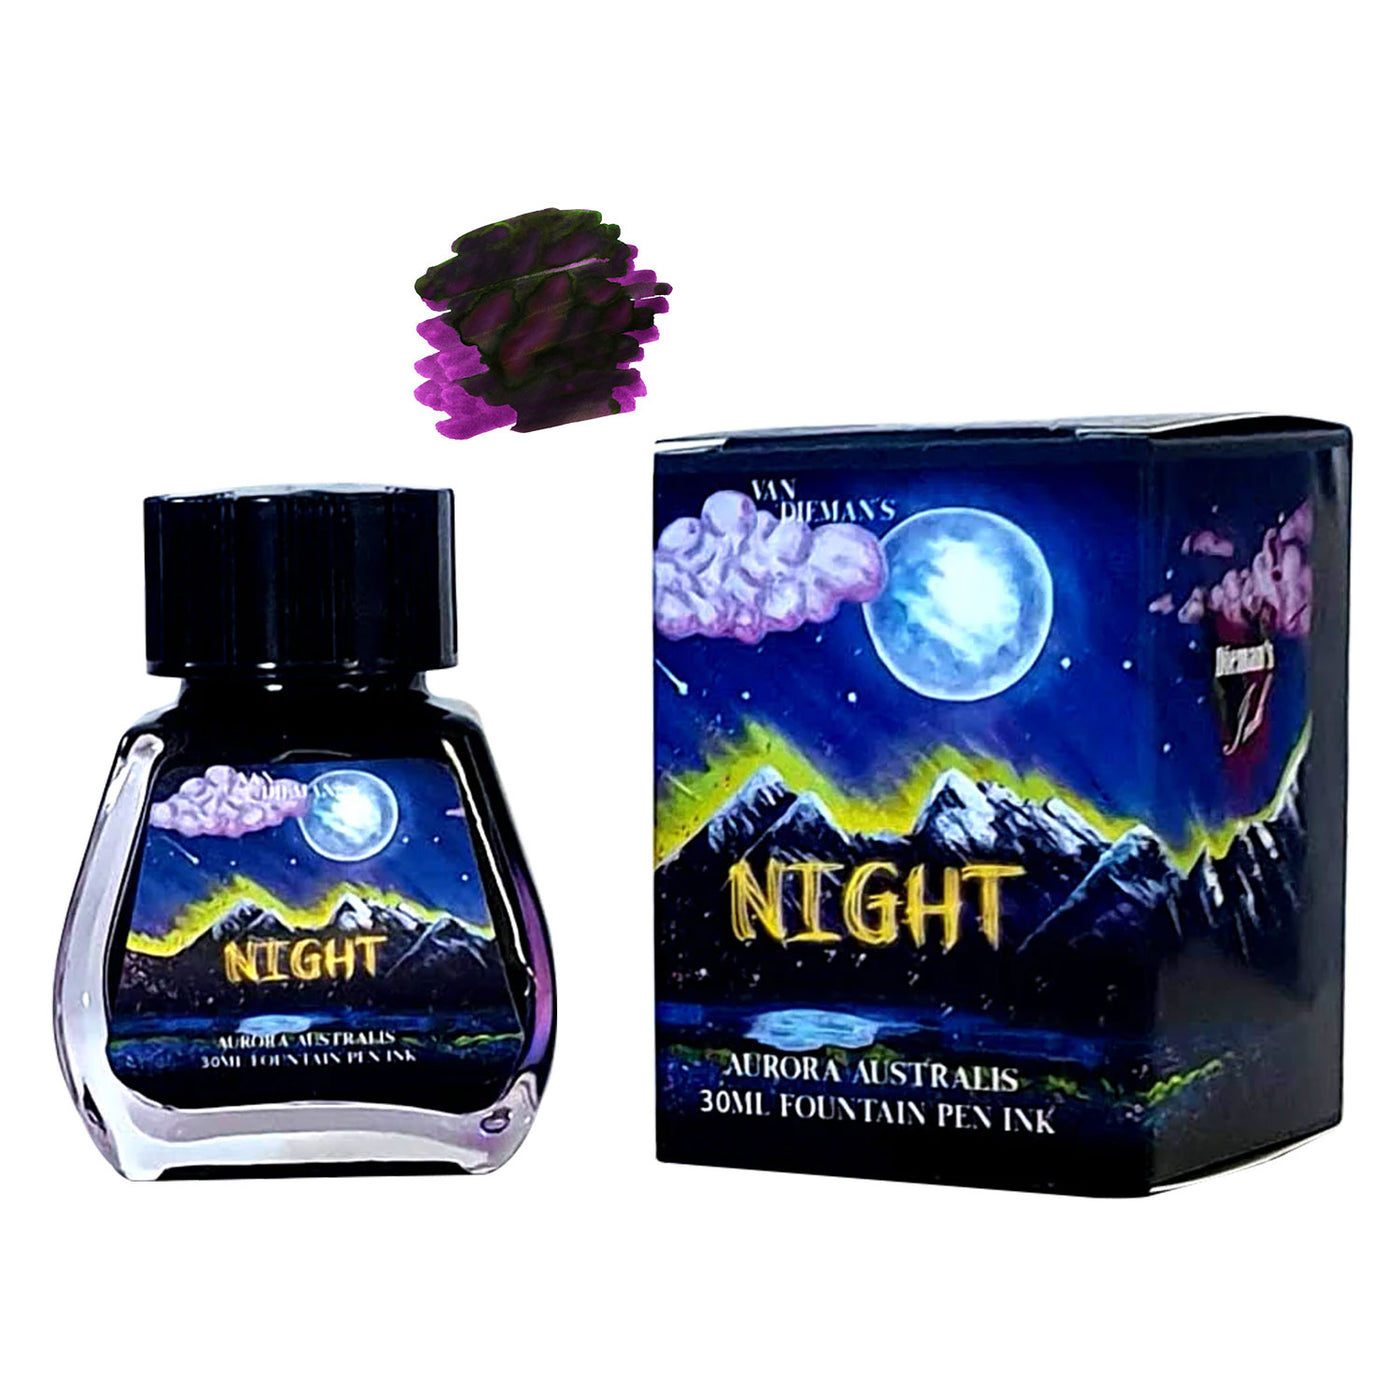 Van Dieman's Night Ink Bottle Aurora Australis - 30ml